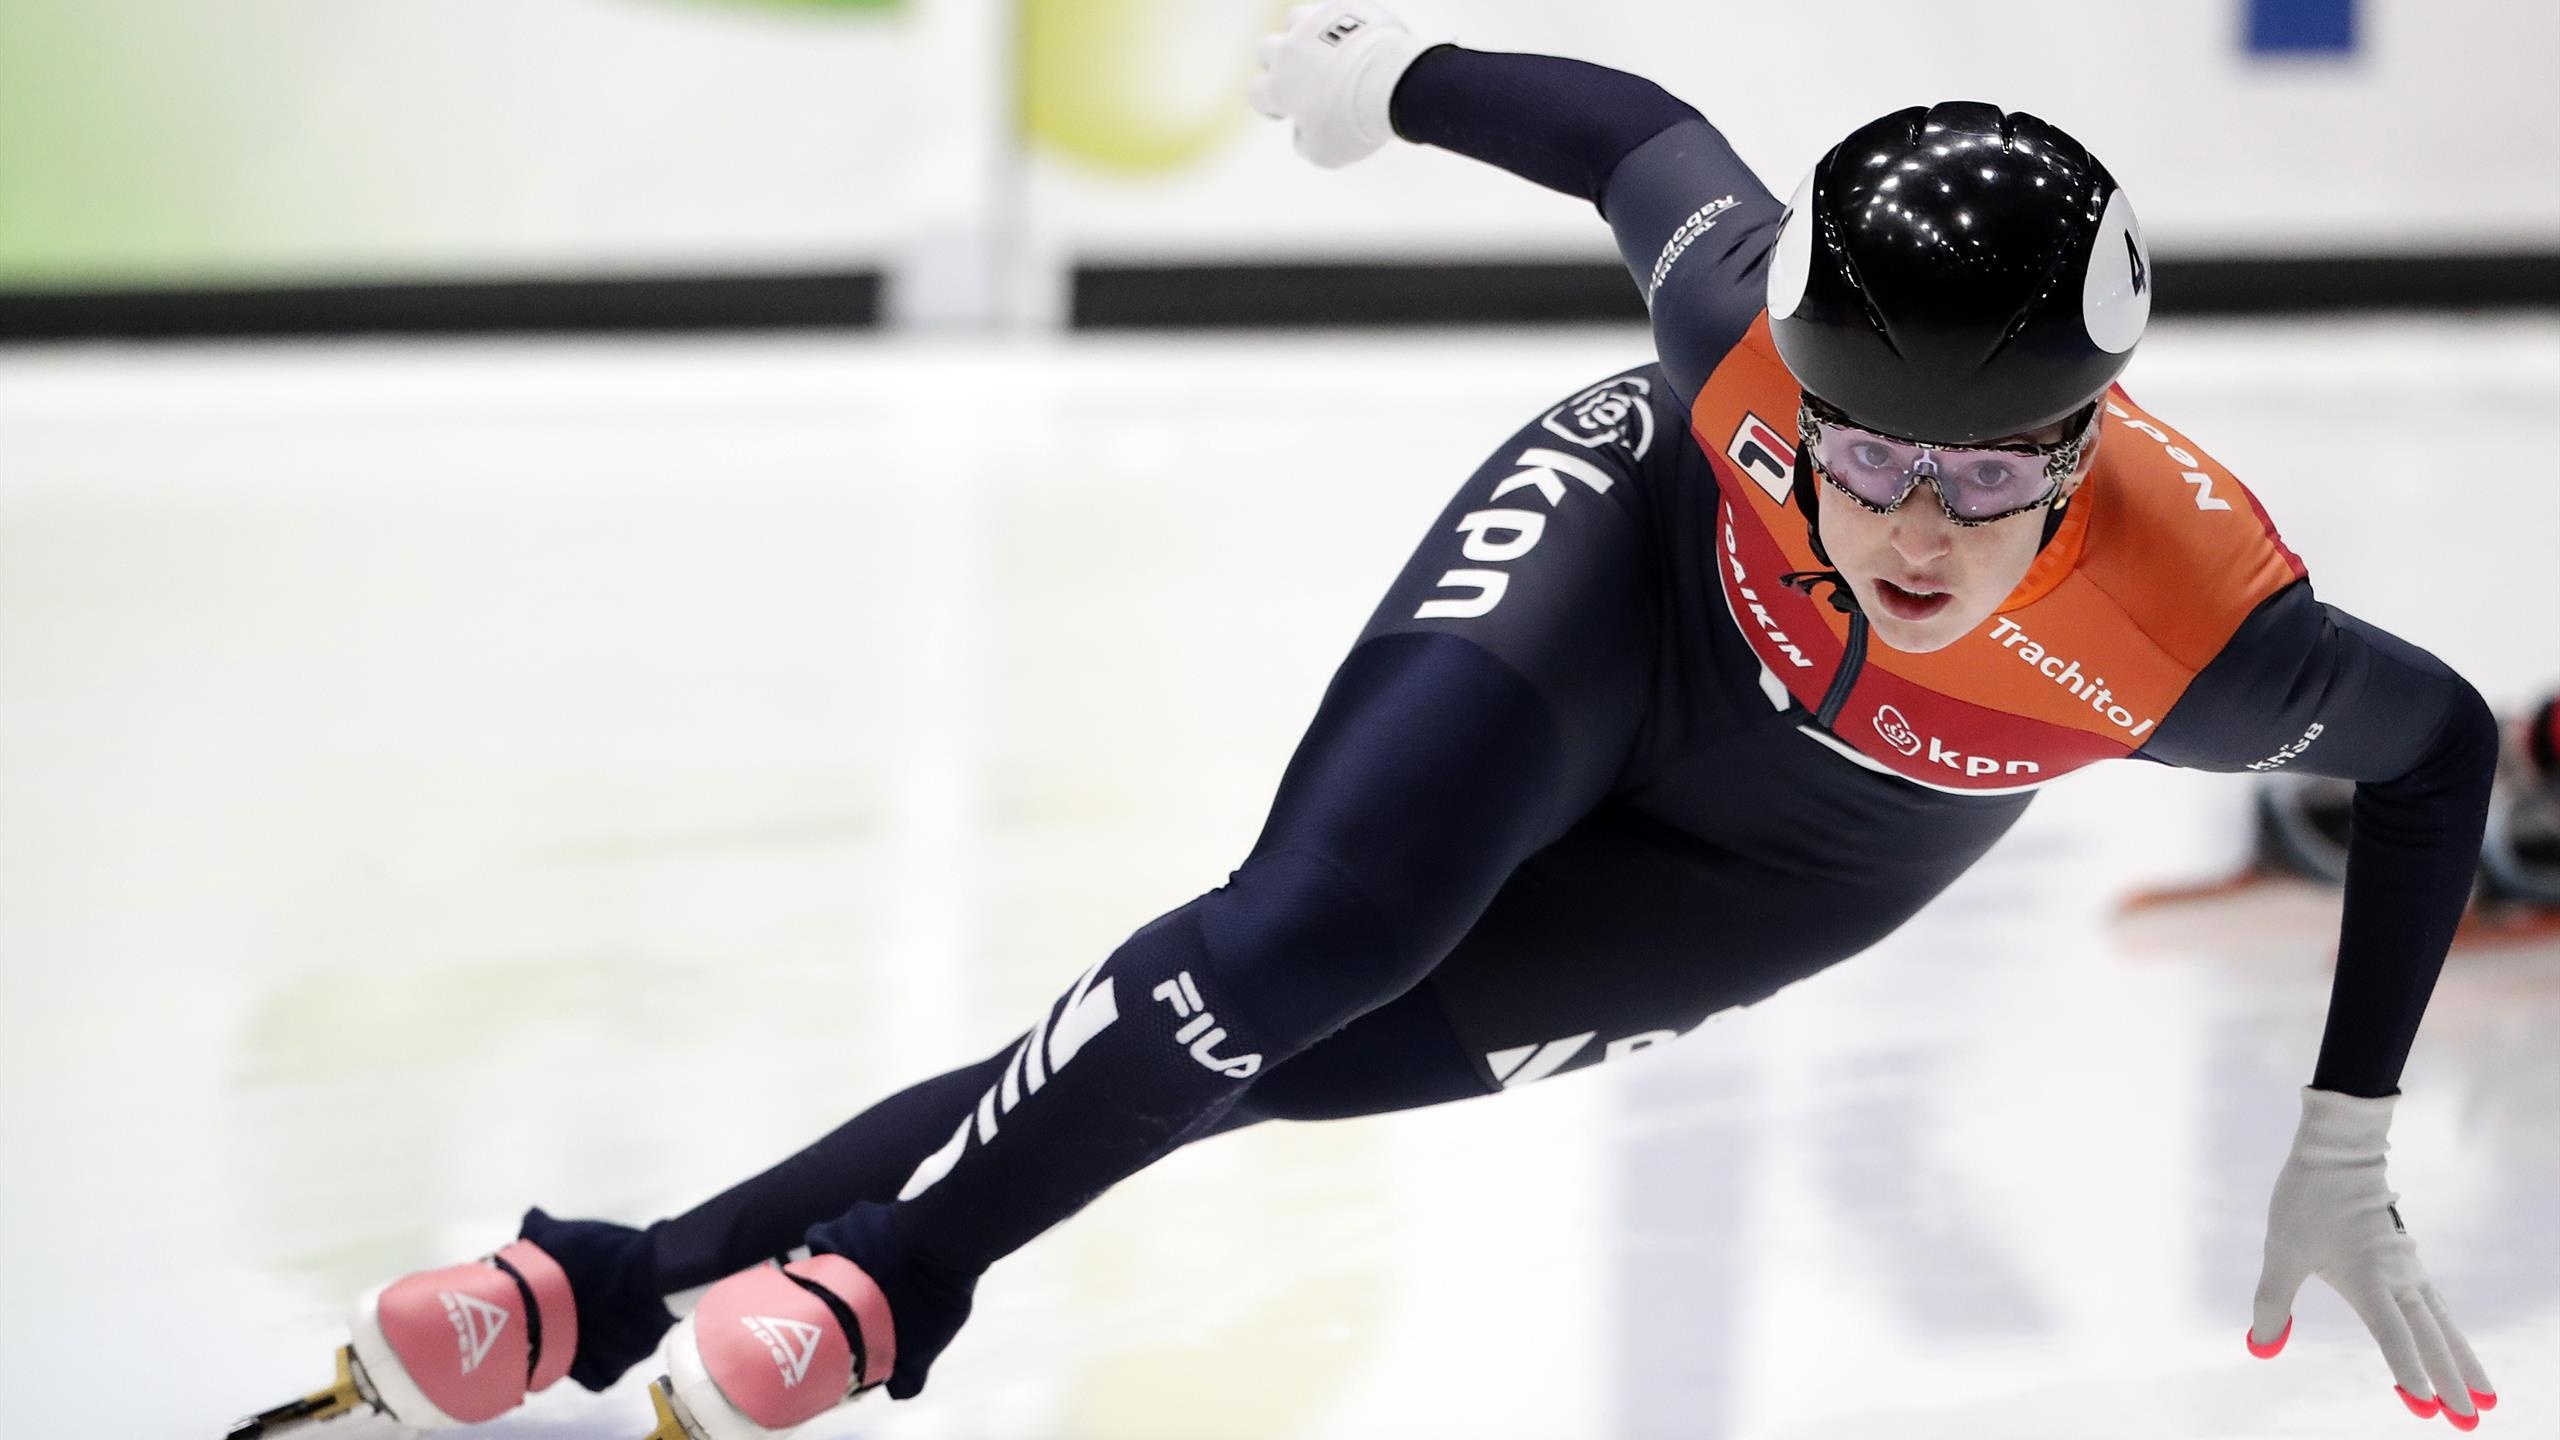 Speed Skating: World champion, Lara van Ruijven, A Dutch short track speed skater, 3000 meters relay team. 2560x1440 HD Wallpaper.